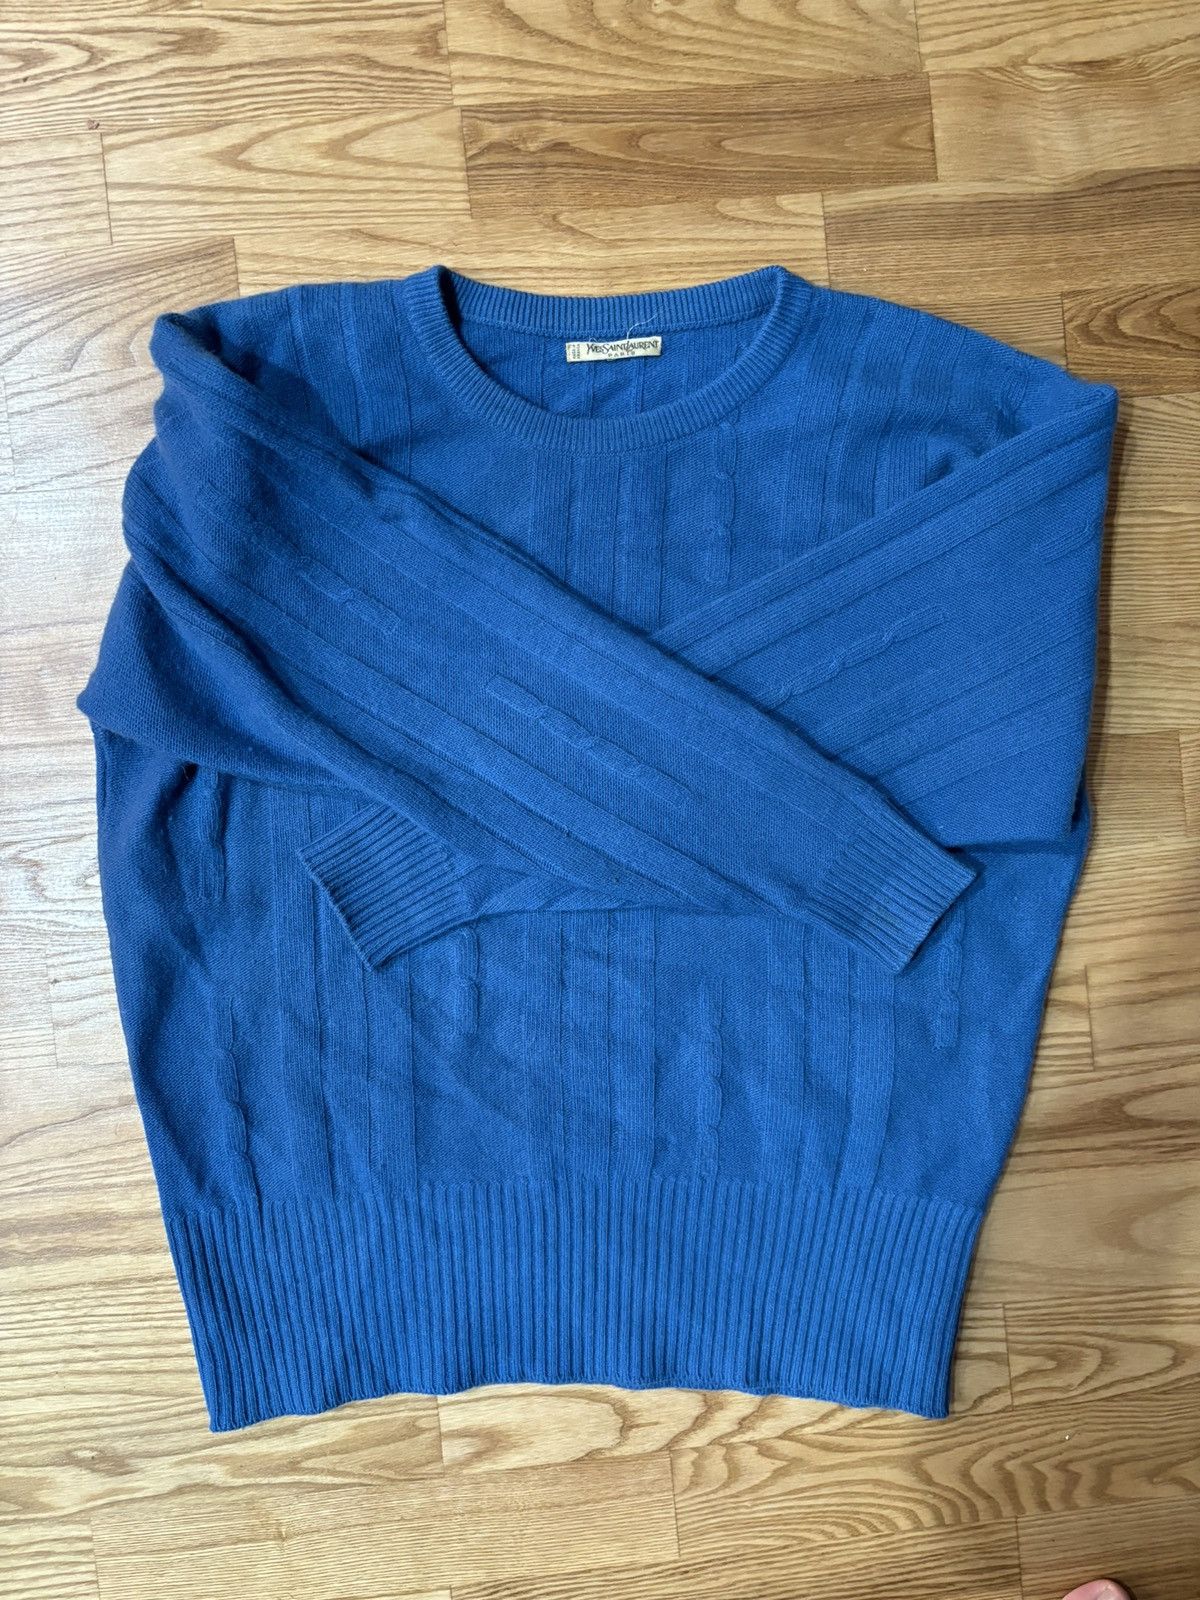 Yves Saint Laurent YSL 100% Cashmere Light Blue Sweater (Vintage) | Grailed